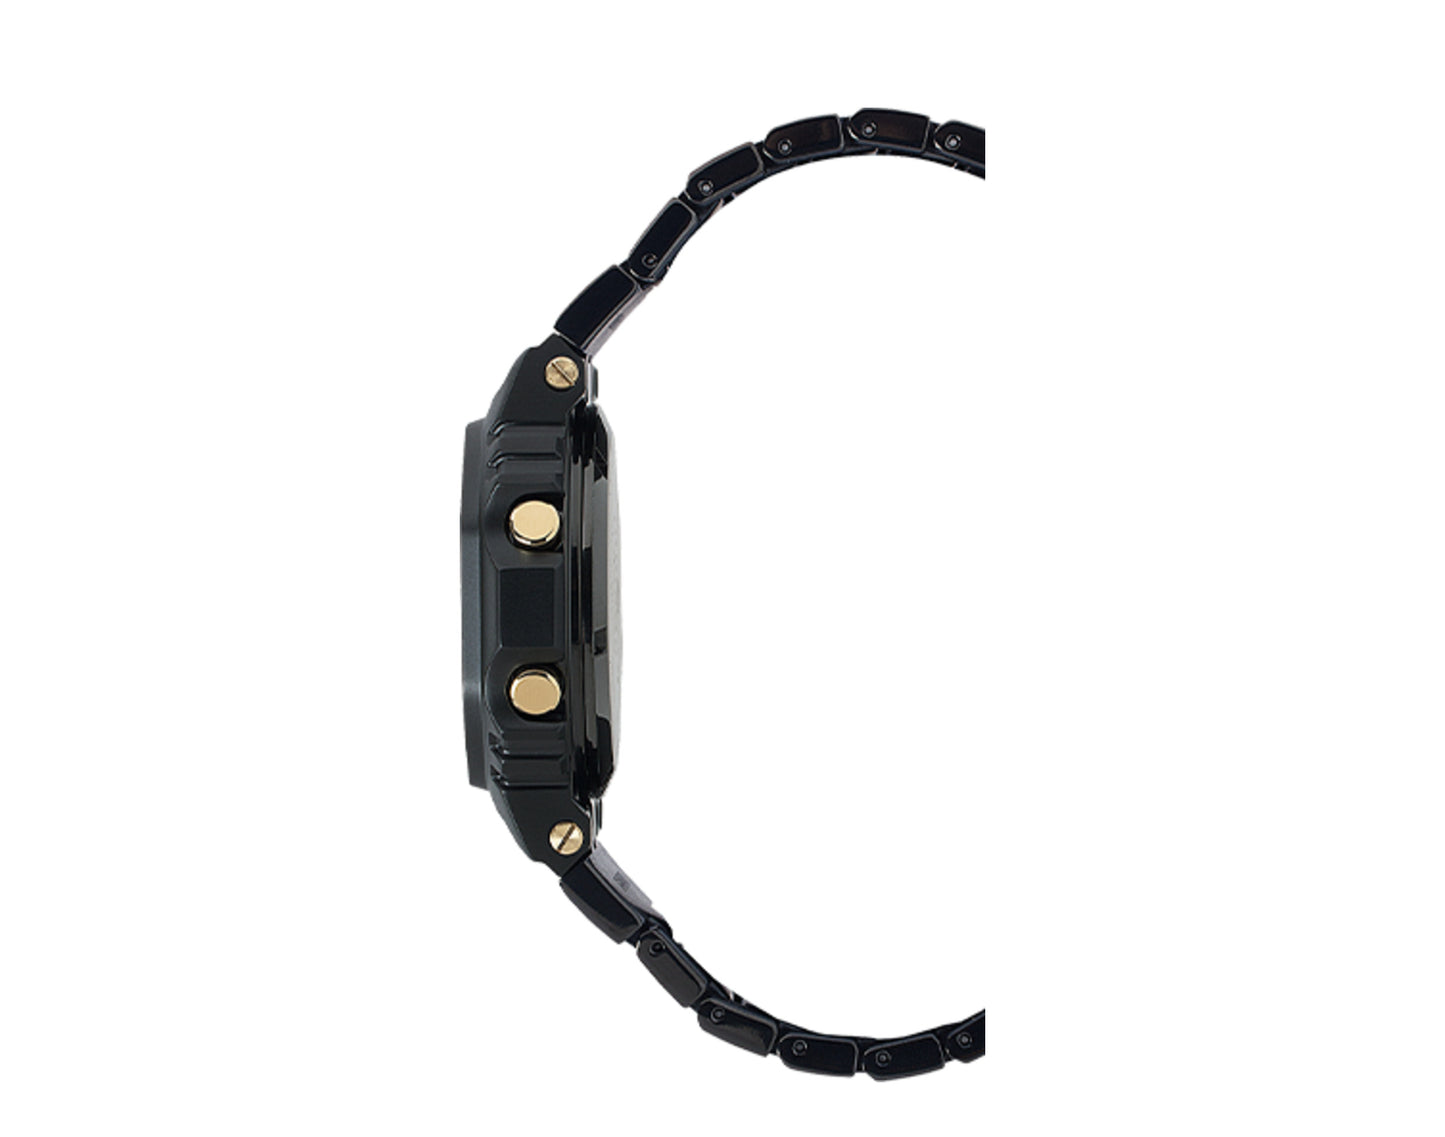 Casio G-Shock GMWB5000 Digital Titanium Black Men's Watch GMWB5000TB-1